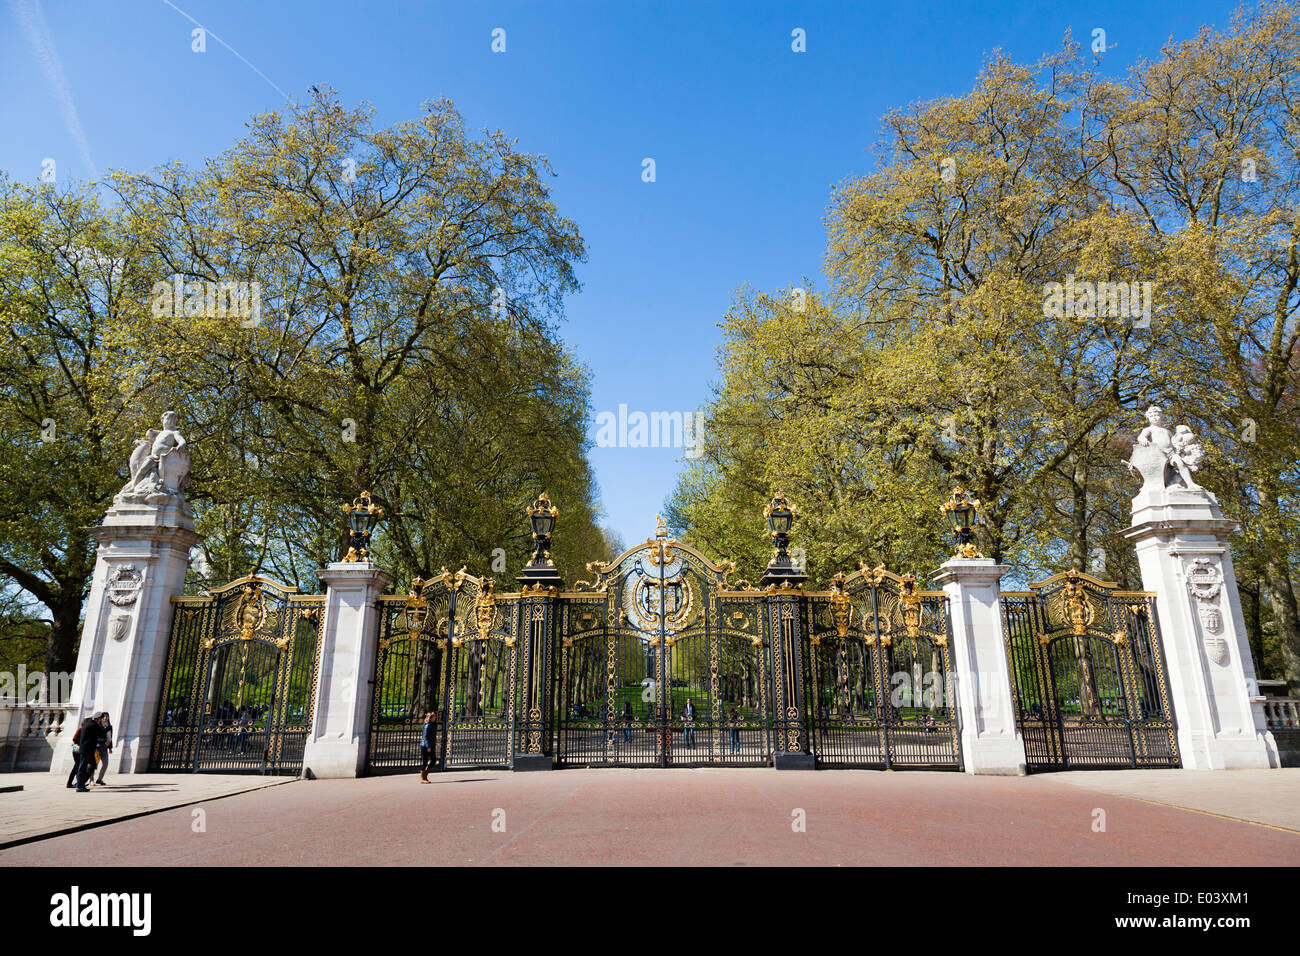 Canada porta d'ingresso al Green park di Londra. Foto Stock